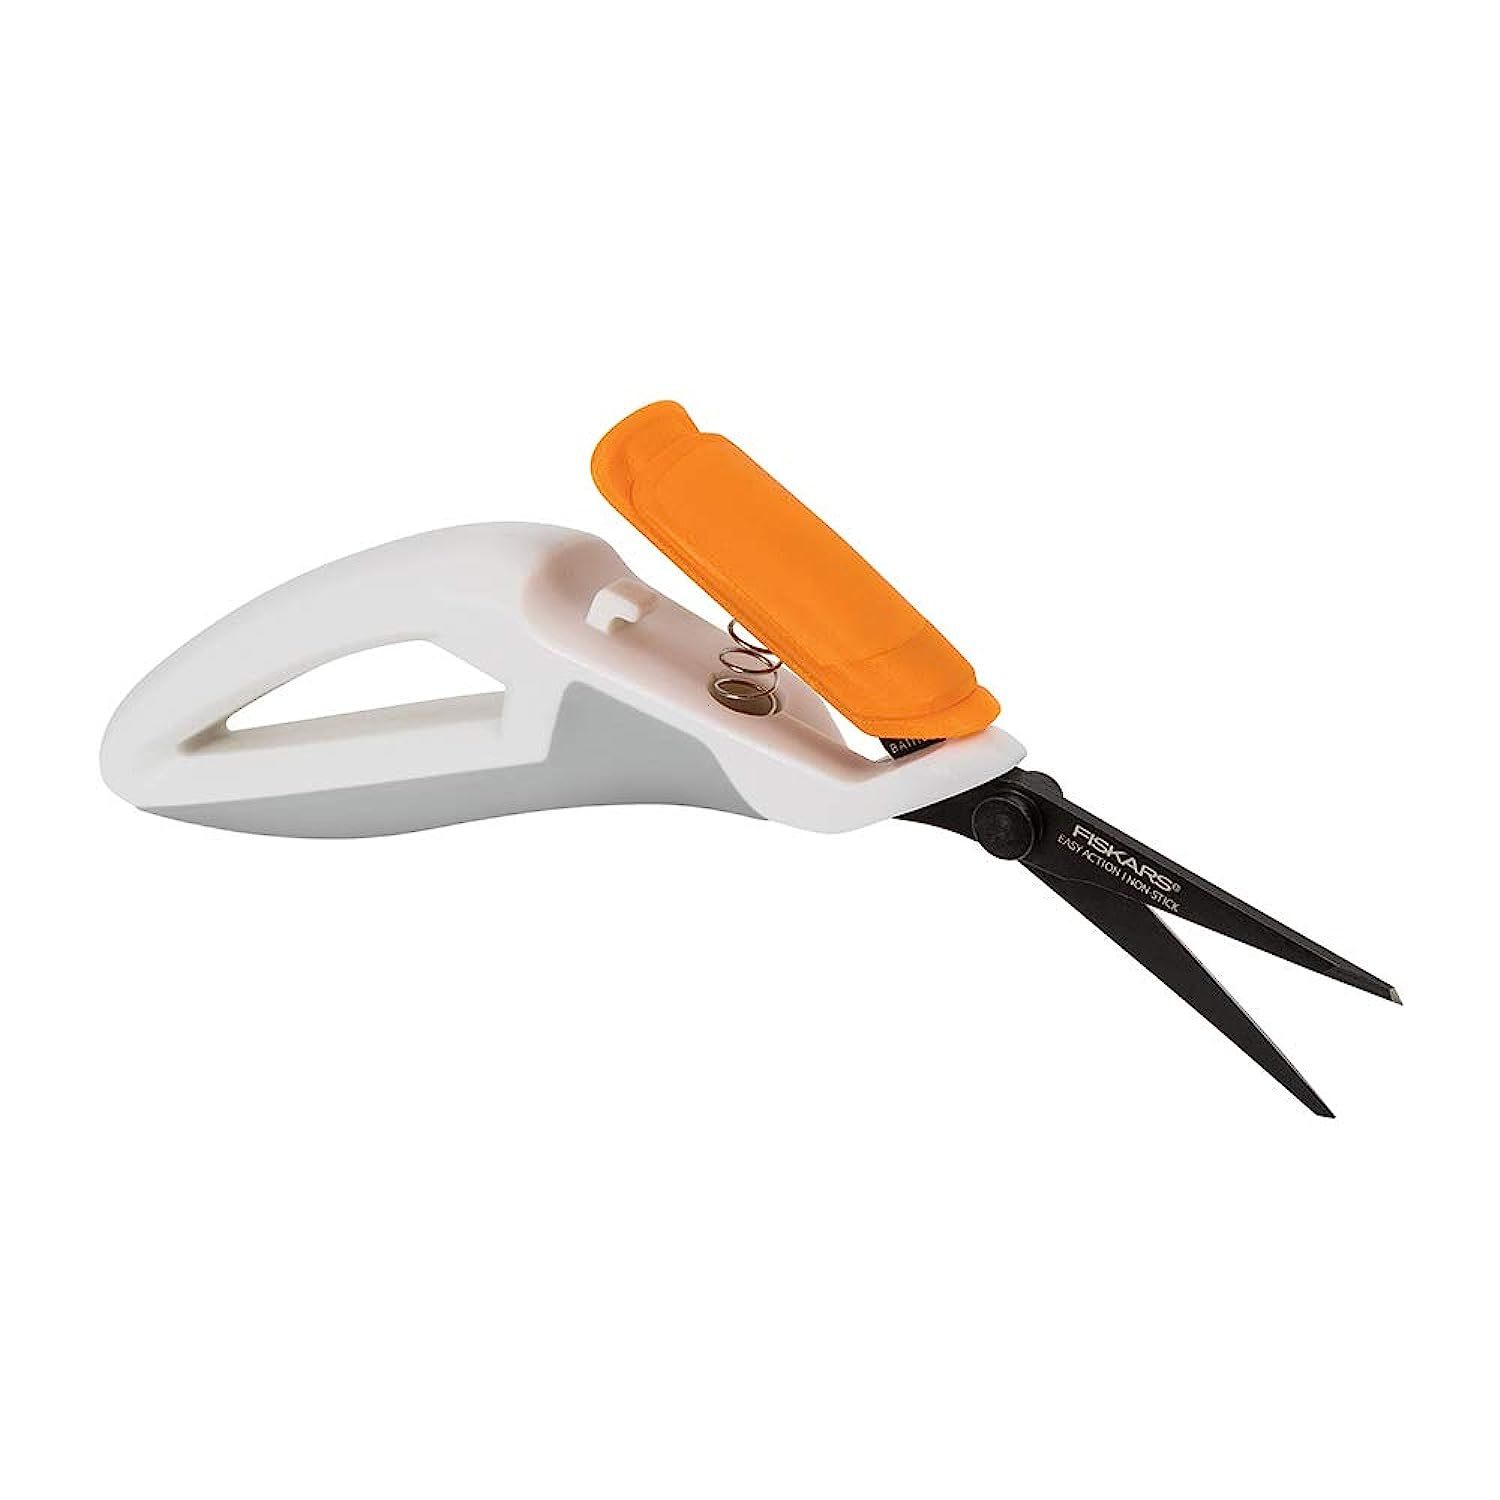 Fiskars 1020499 Scissors Sharpener, 9 x 4 x 13.8 cm, White/Orange